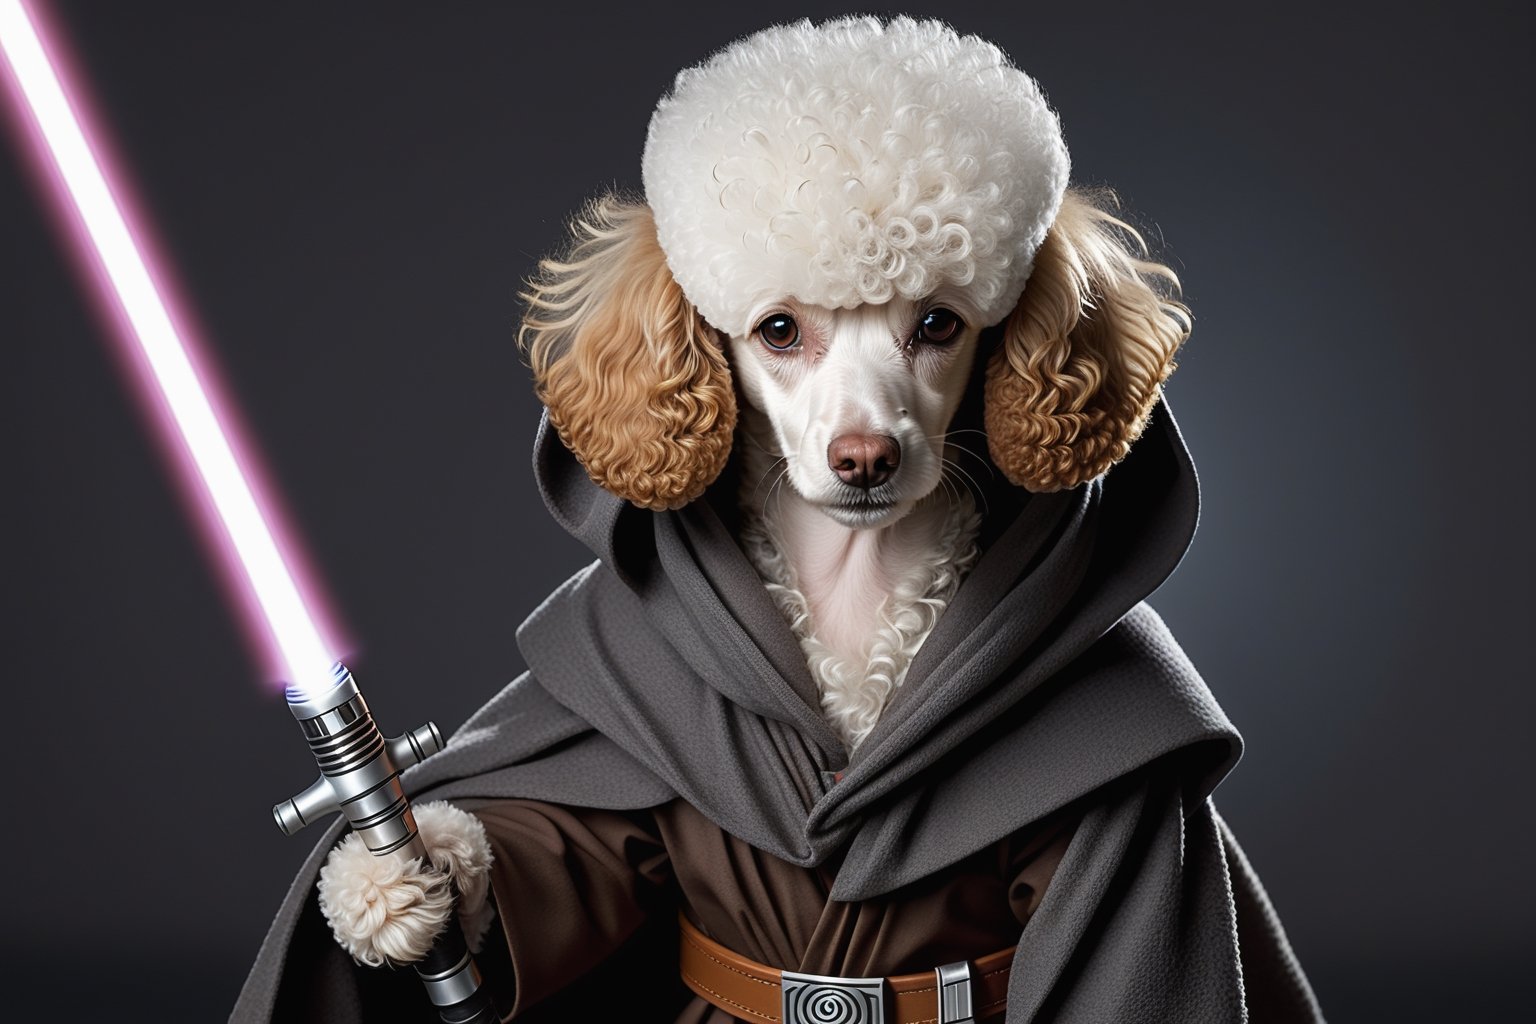 (poodle:1.3), a master jedi poodle white star wars, holding lightsaber, wearing a jedi cloak hood, photorealistic,poodle
